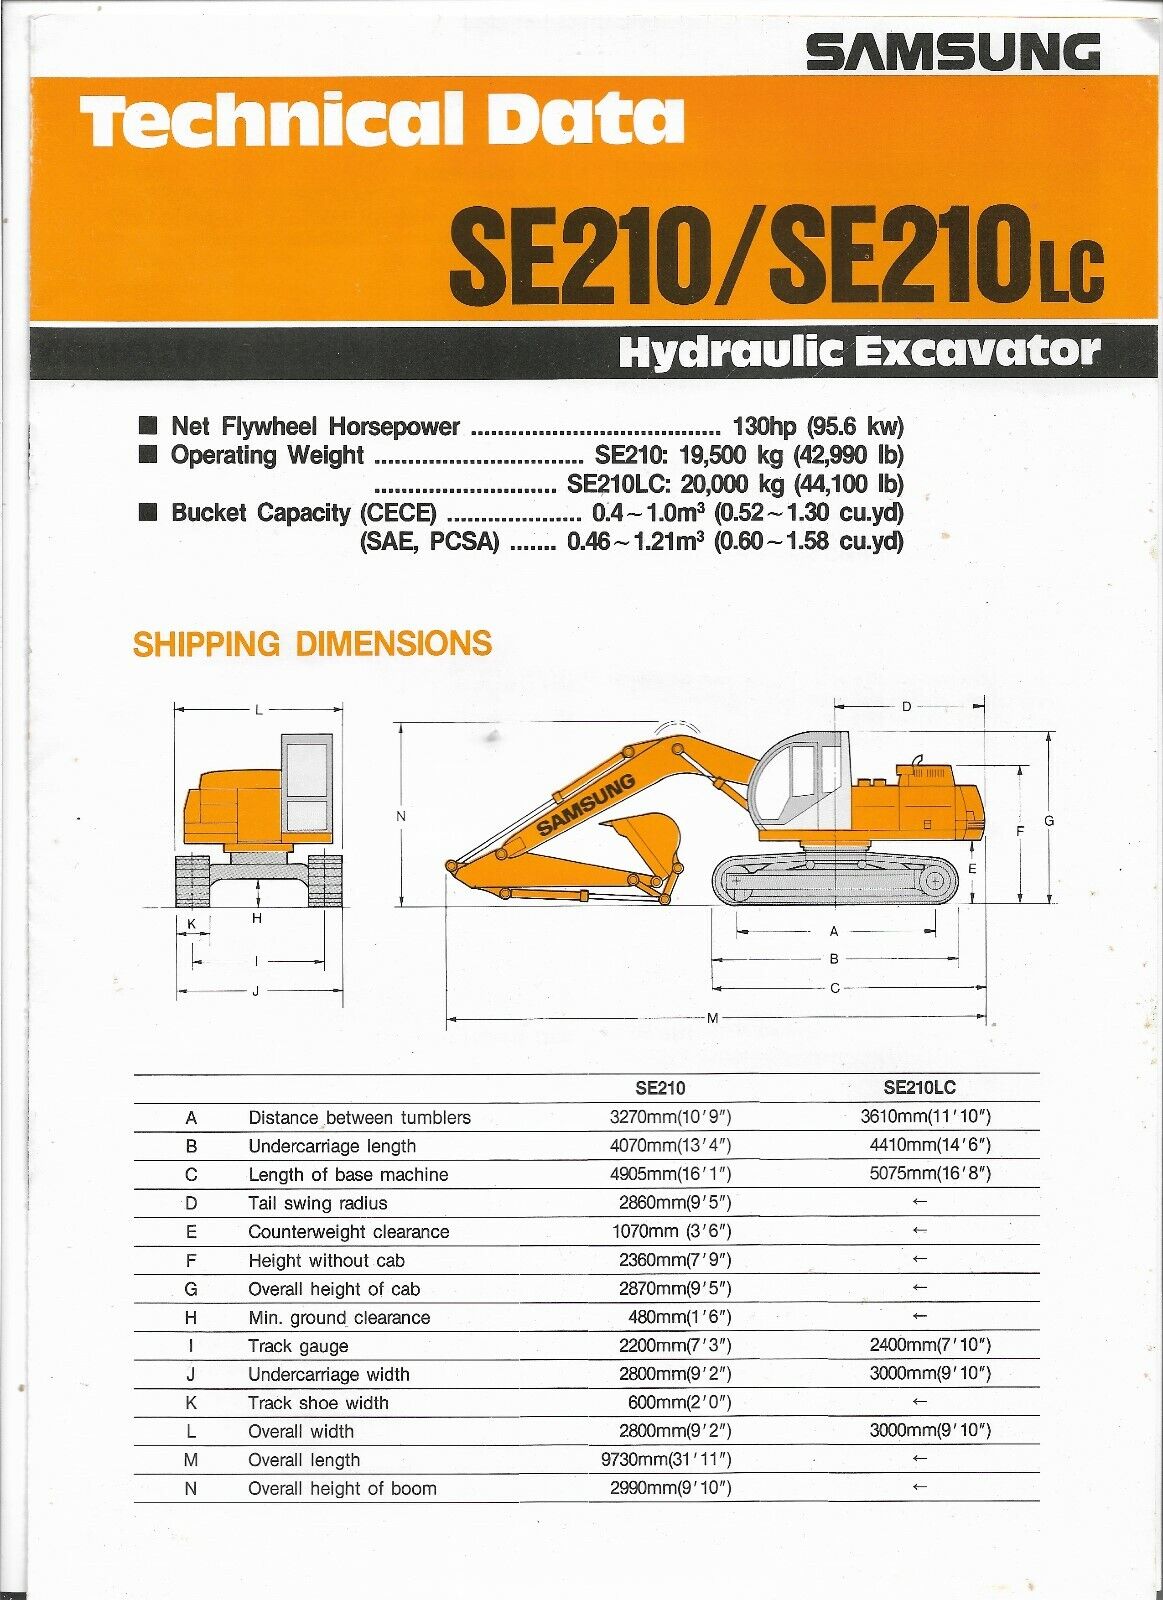 Original Samsung SE210 and SE210LC Hydraulic Excavator Technical Data Brochure